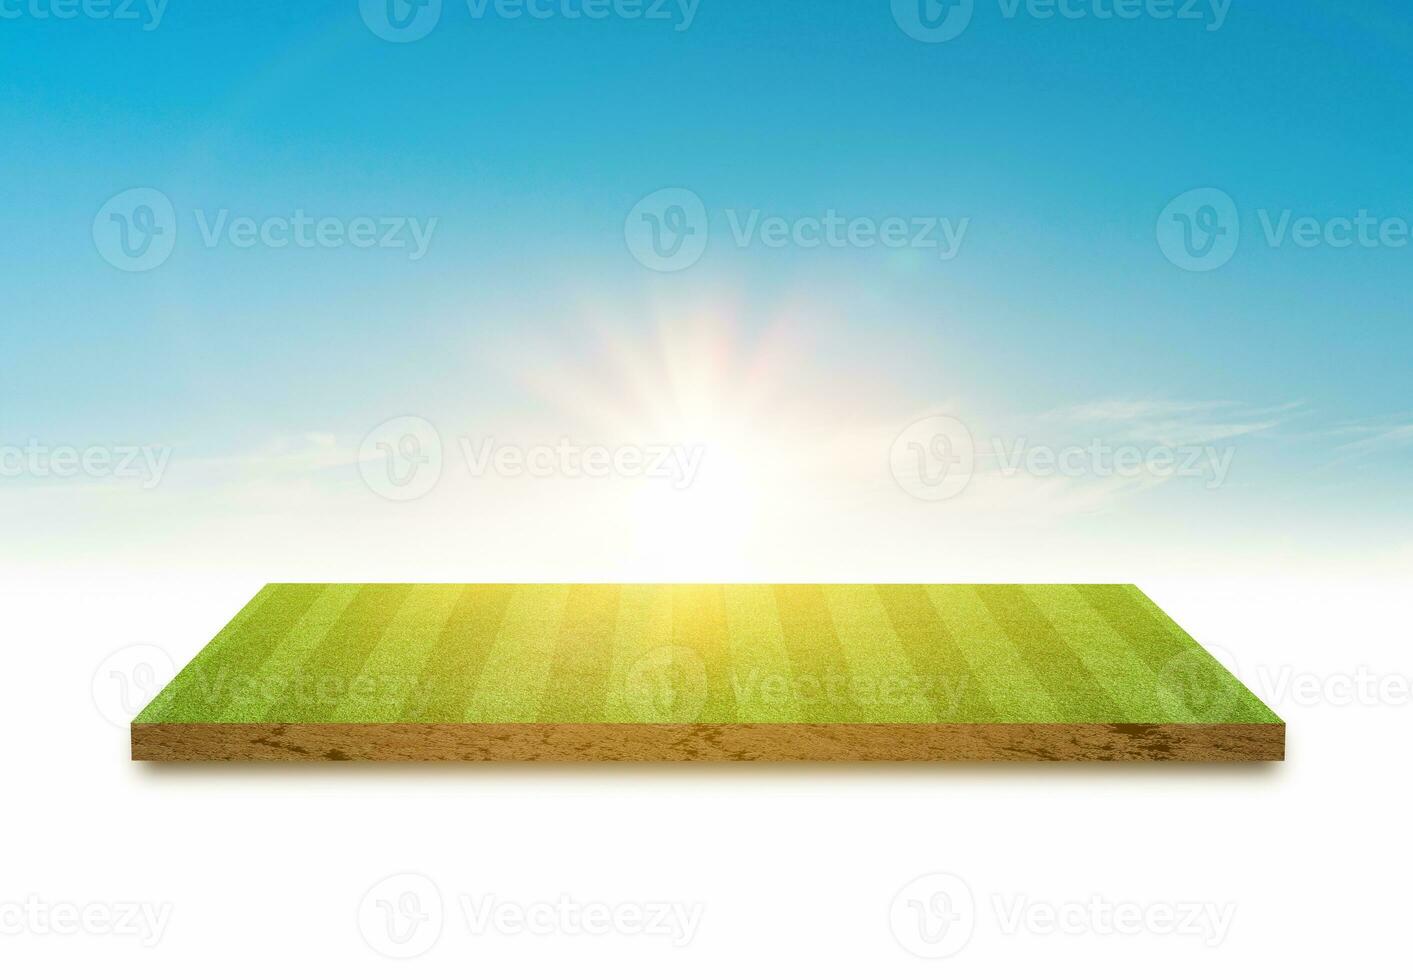 rendering 3D. campo da calcio in erba verde e sfondo nuvola cielo. foto